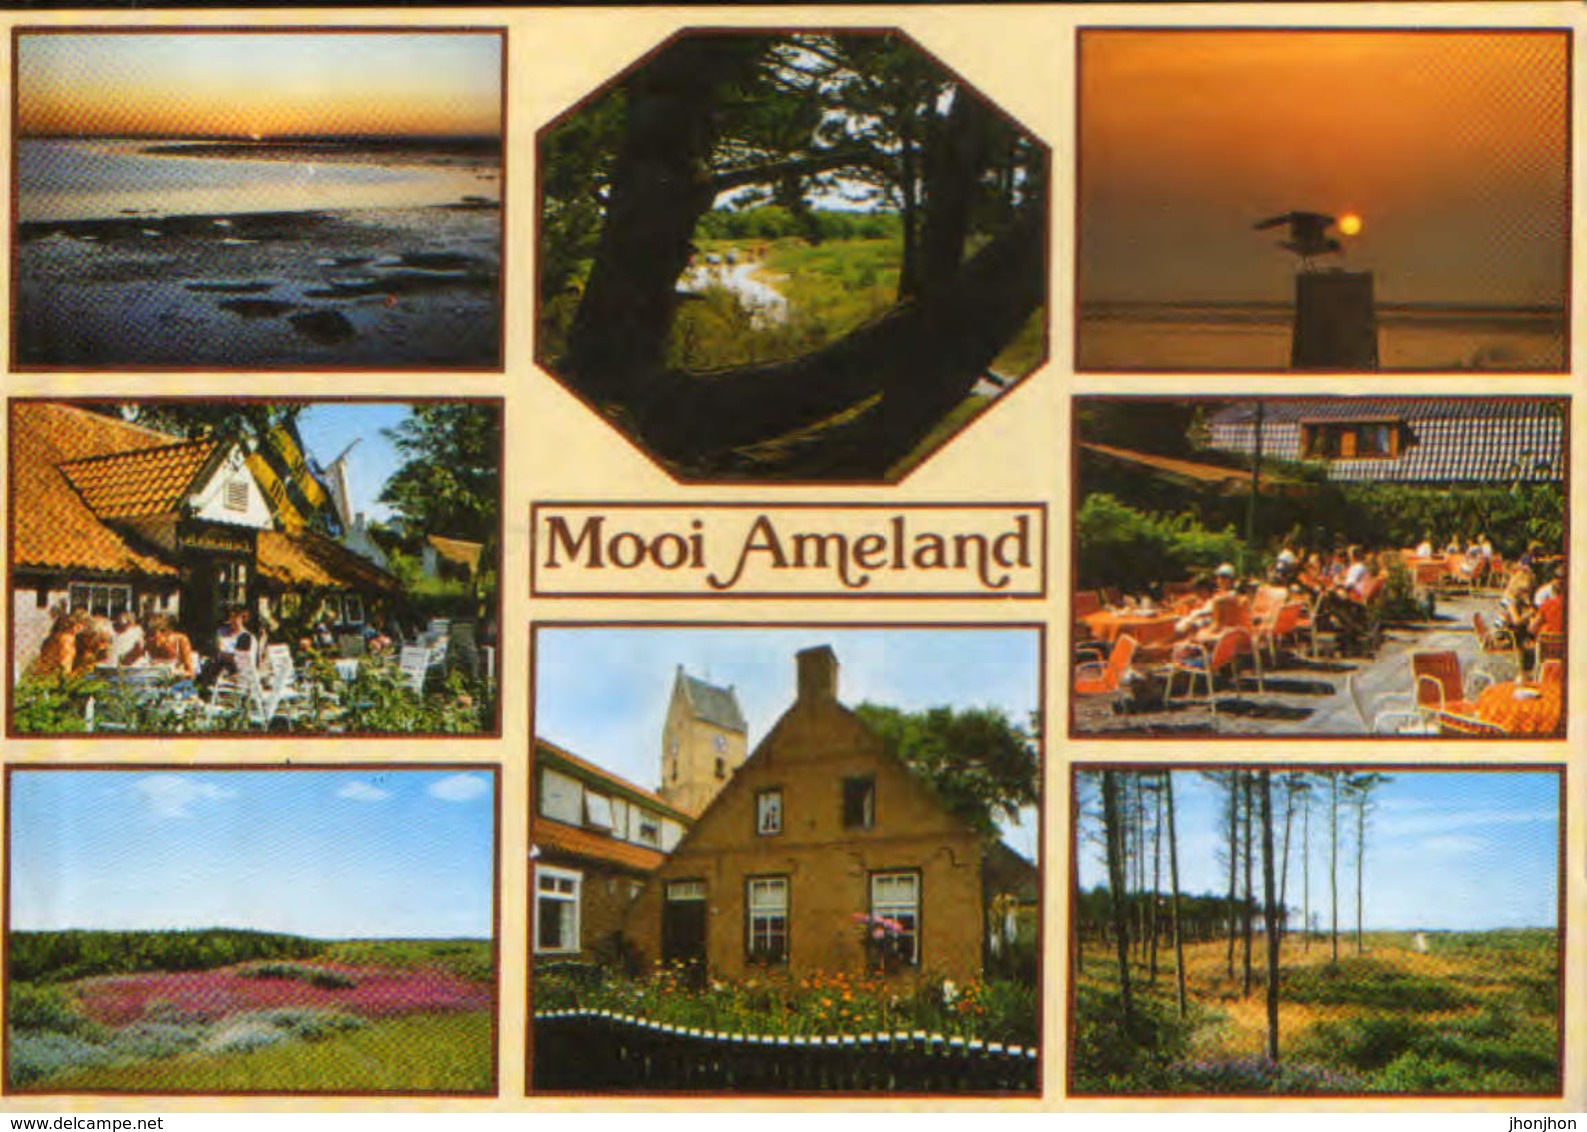 Nederland - Postcard Circulated In 1985  -  Ameland - Collage Of Images  - 2/scans - Ameland